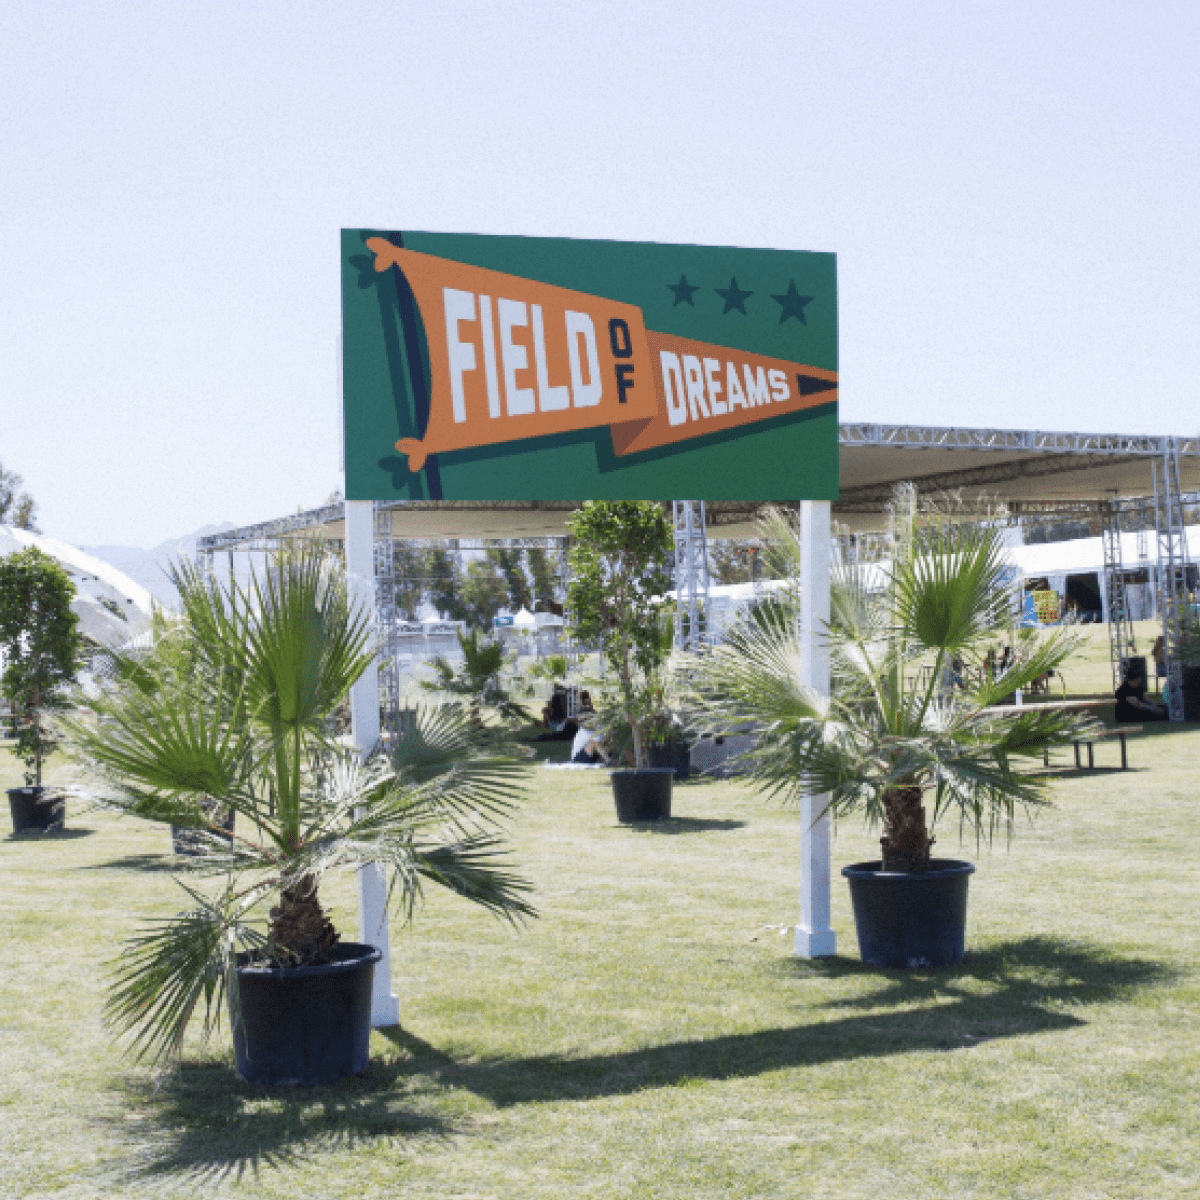 Field of Dreams sign at Coachella